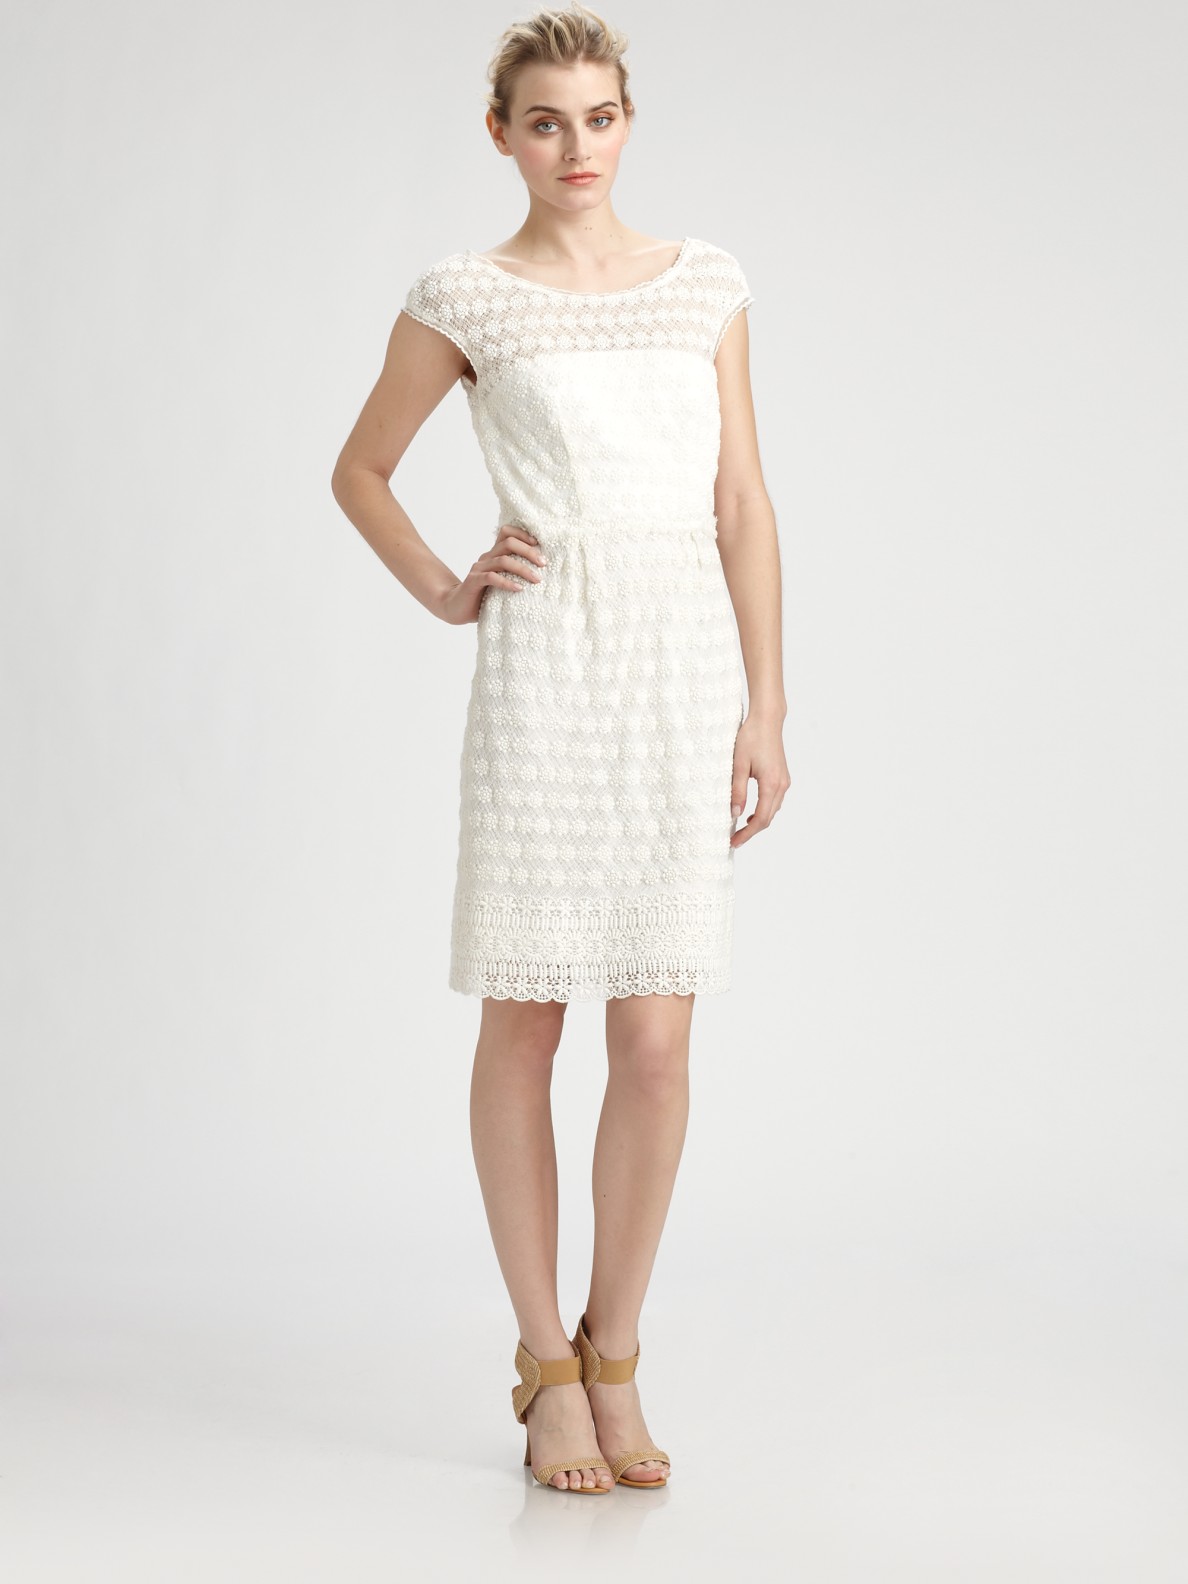 Lyst - Philosophy Cotton Macrame Dress in White